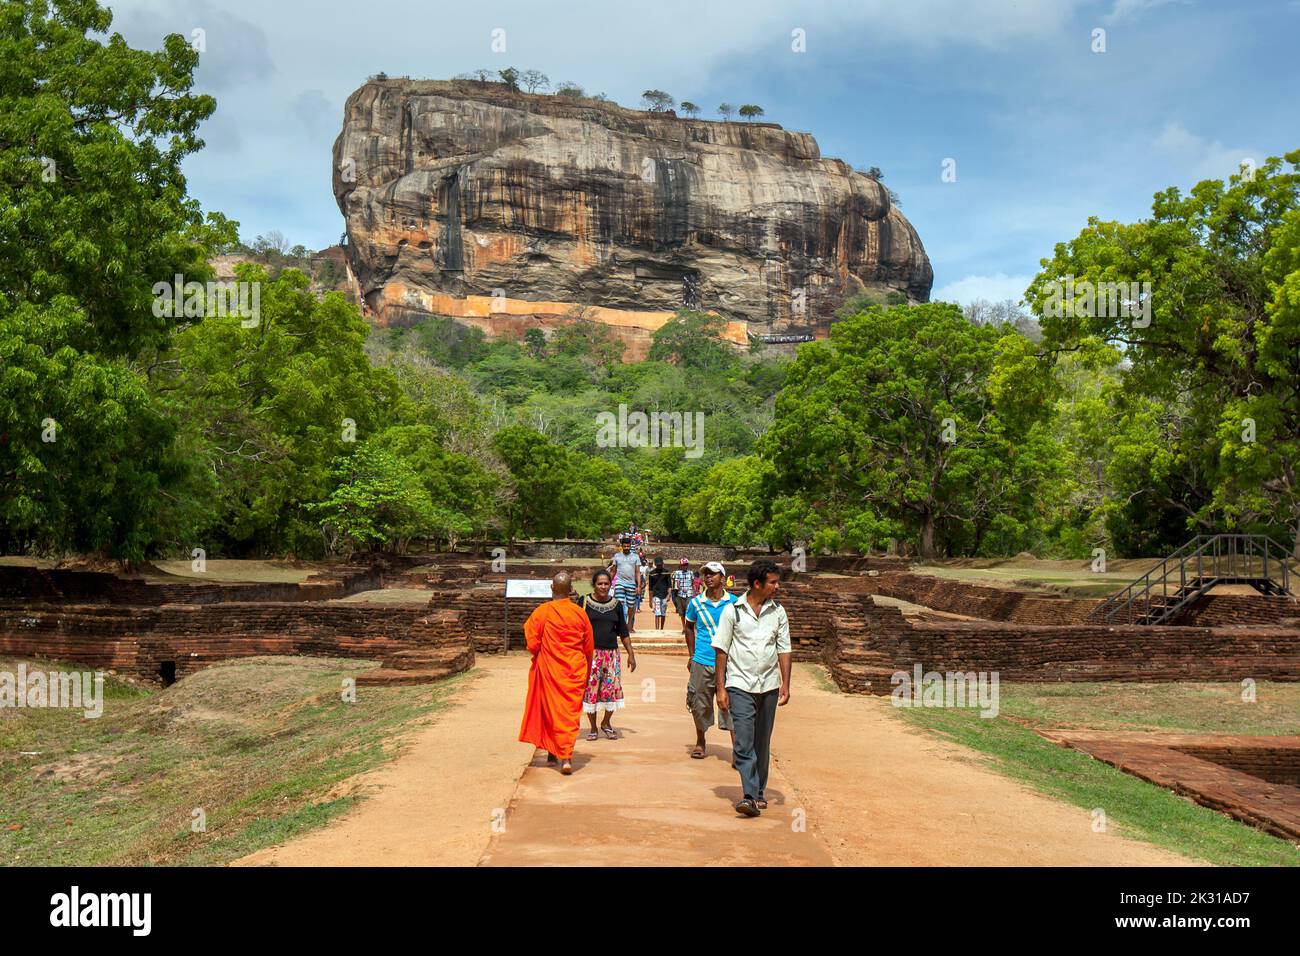 SIGIRIYA, SRI LANKA - AUGUST 18, 2019 : Visitors to Sigiriya Rock Fortress at Sigiriya in central Sri Lanka walk through the ruins of the Royal Garden Stock Photo